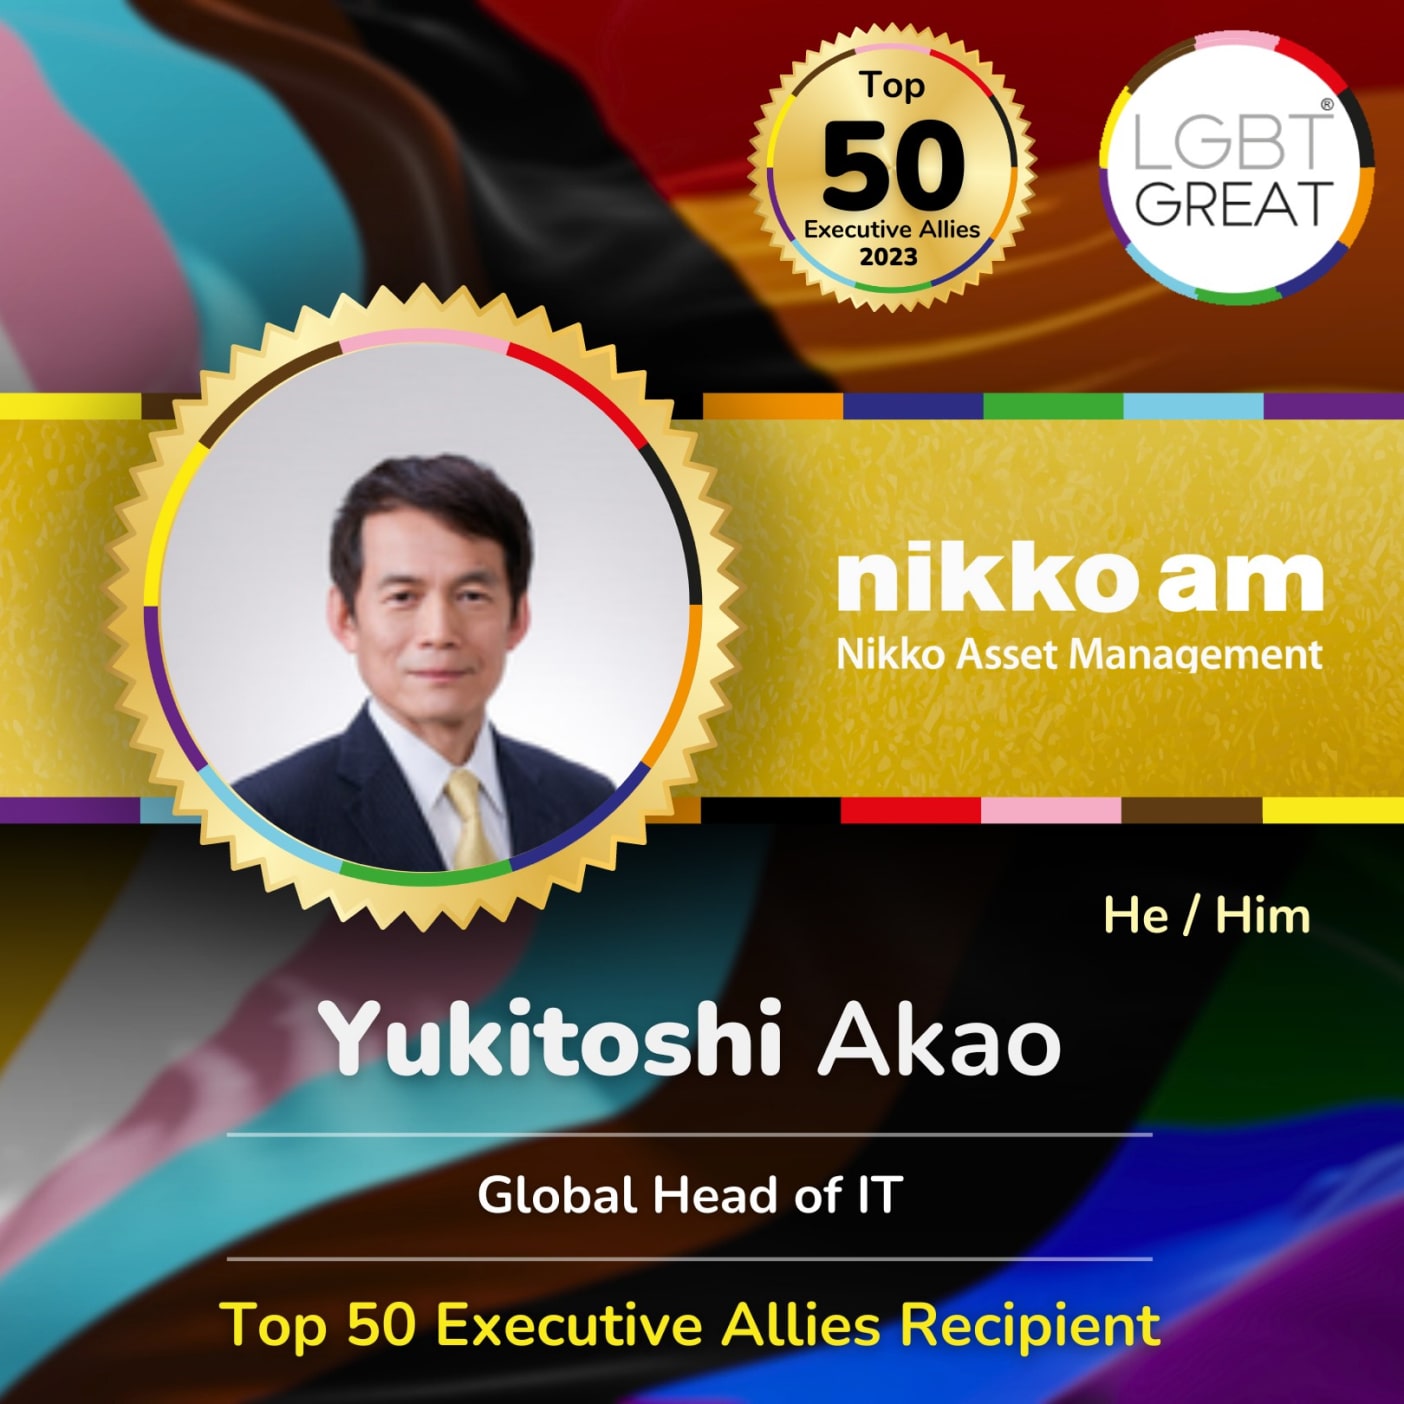 Yukitoshi Top 50 Executive Ally